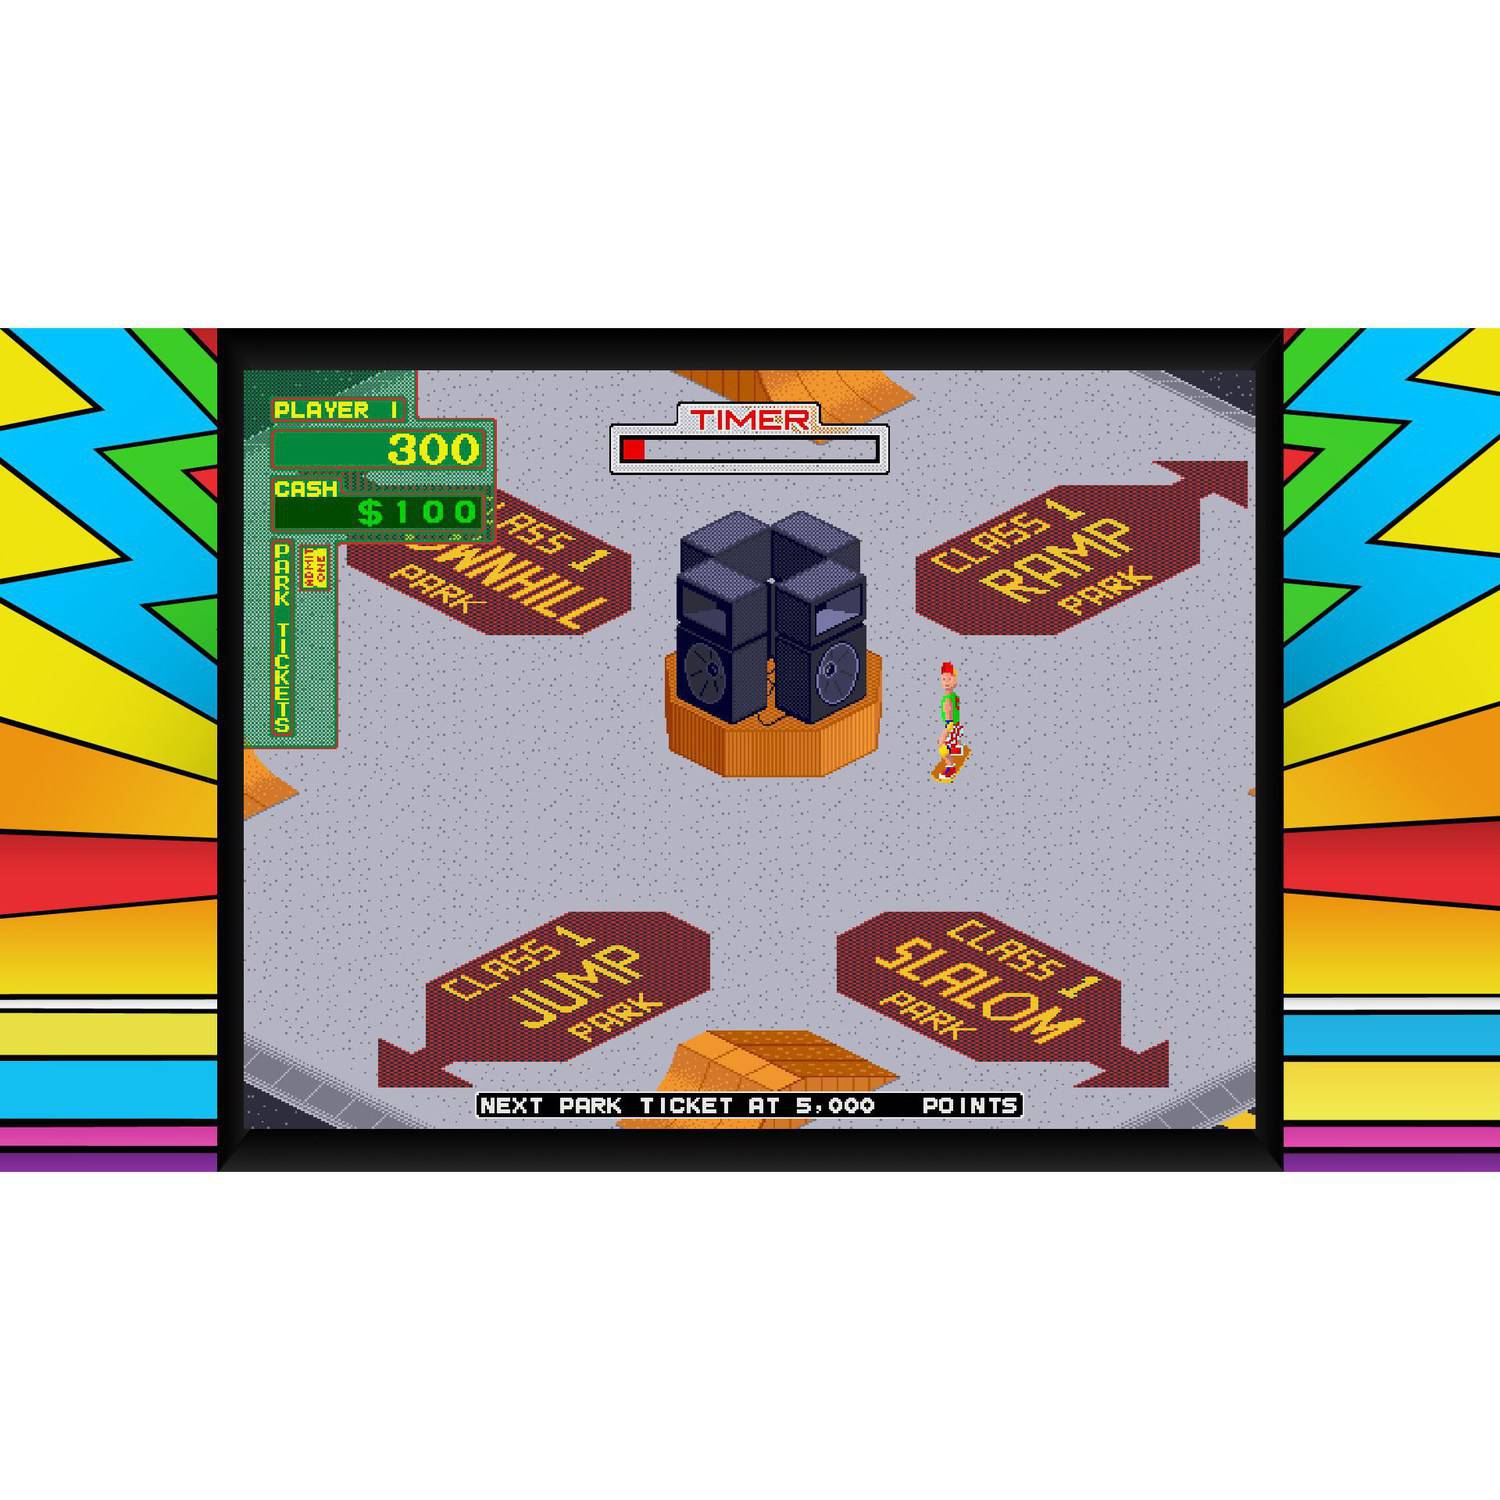 Midway Arcade Origins - Playstation 3 - image 2 of 7